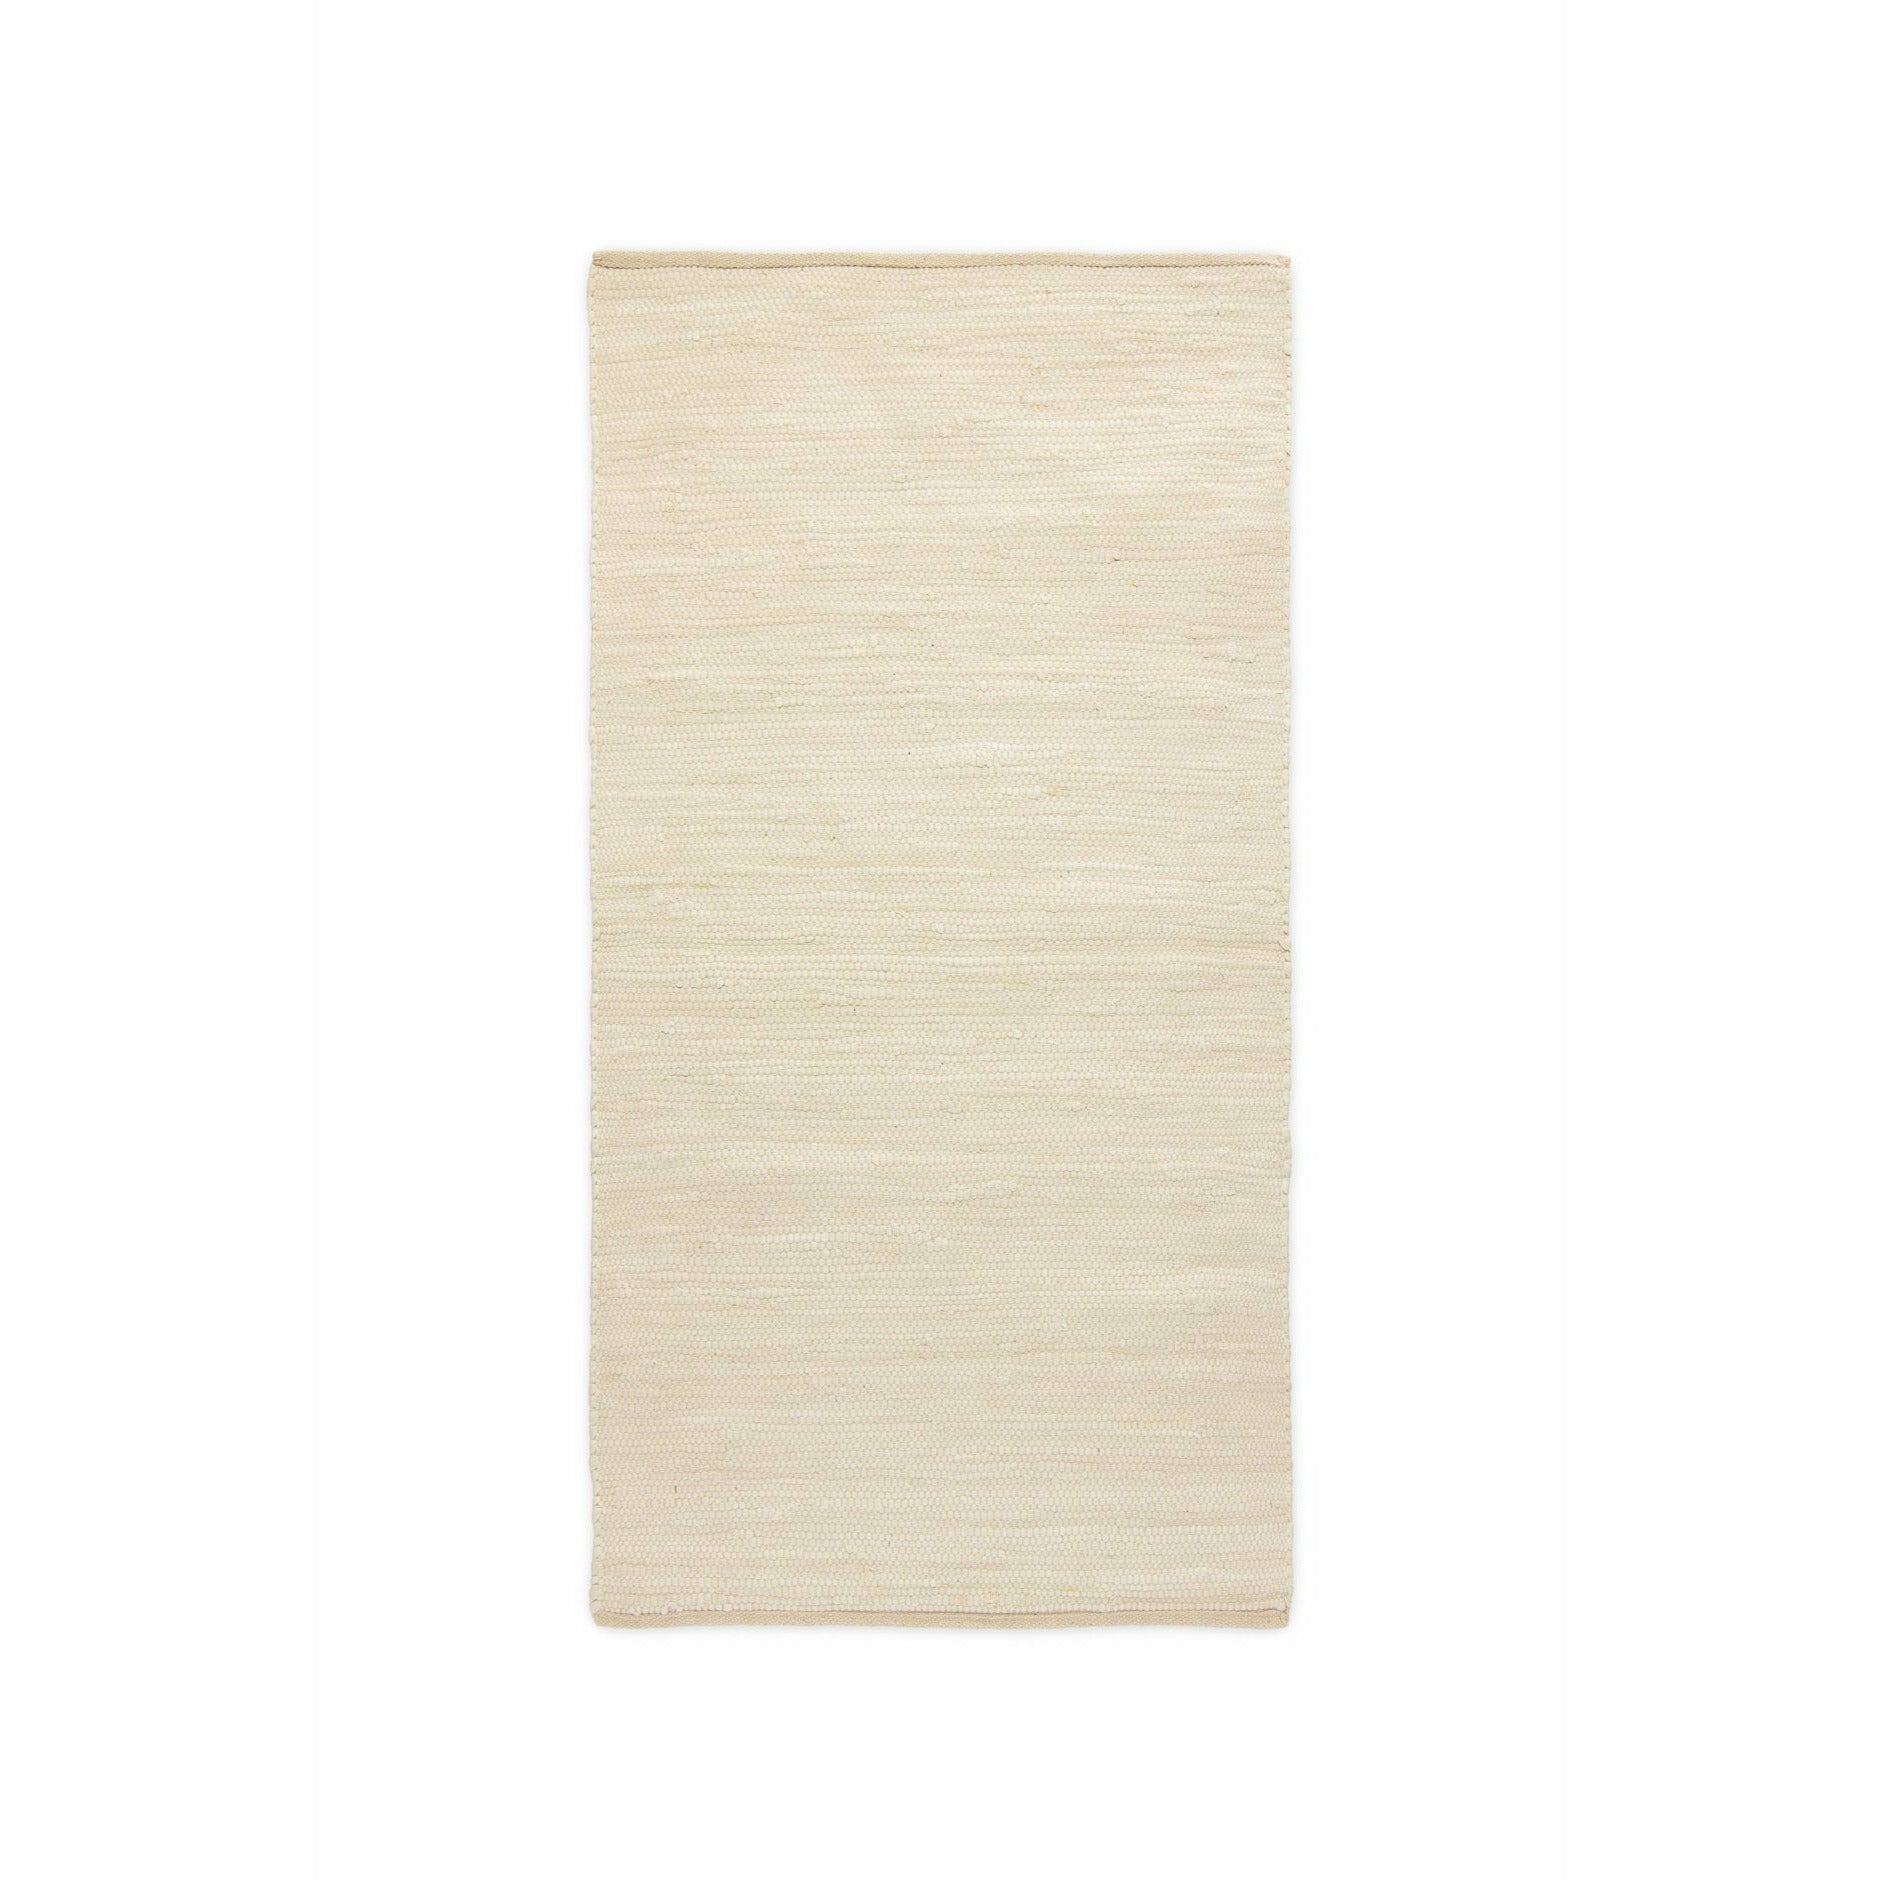 Rug Solid Coton Cotton Desert White, 65 x 135 cm